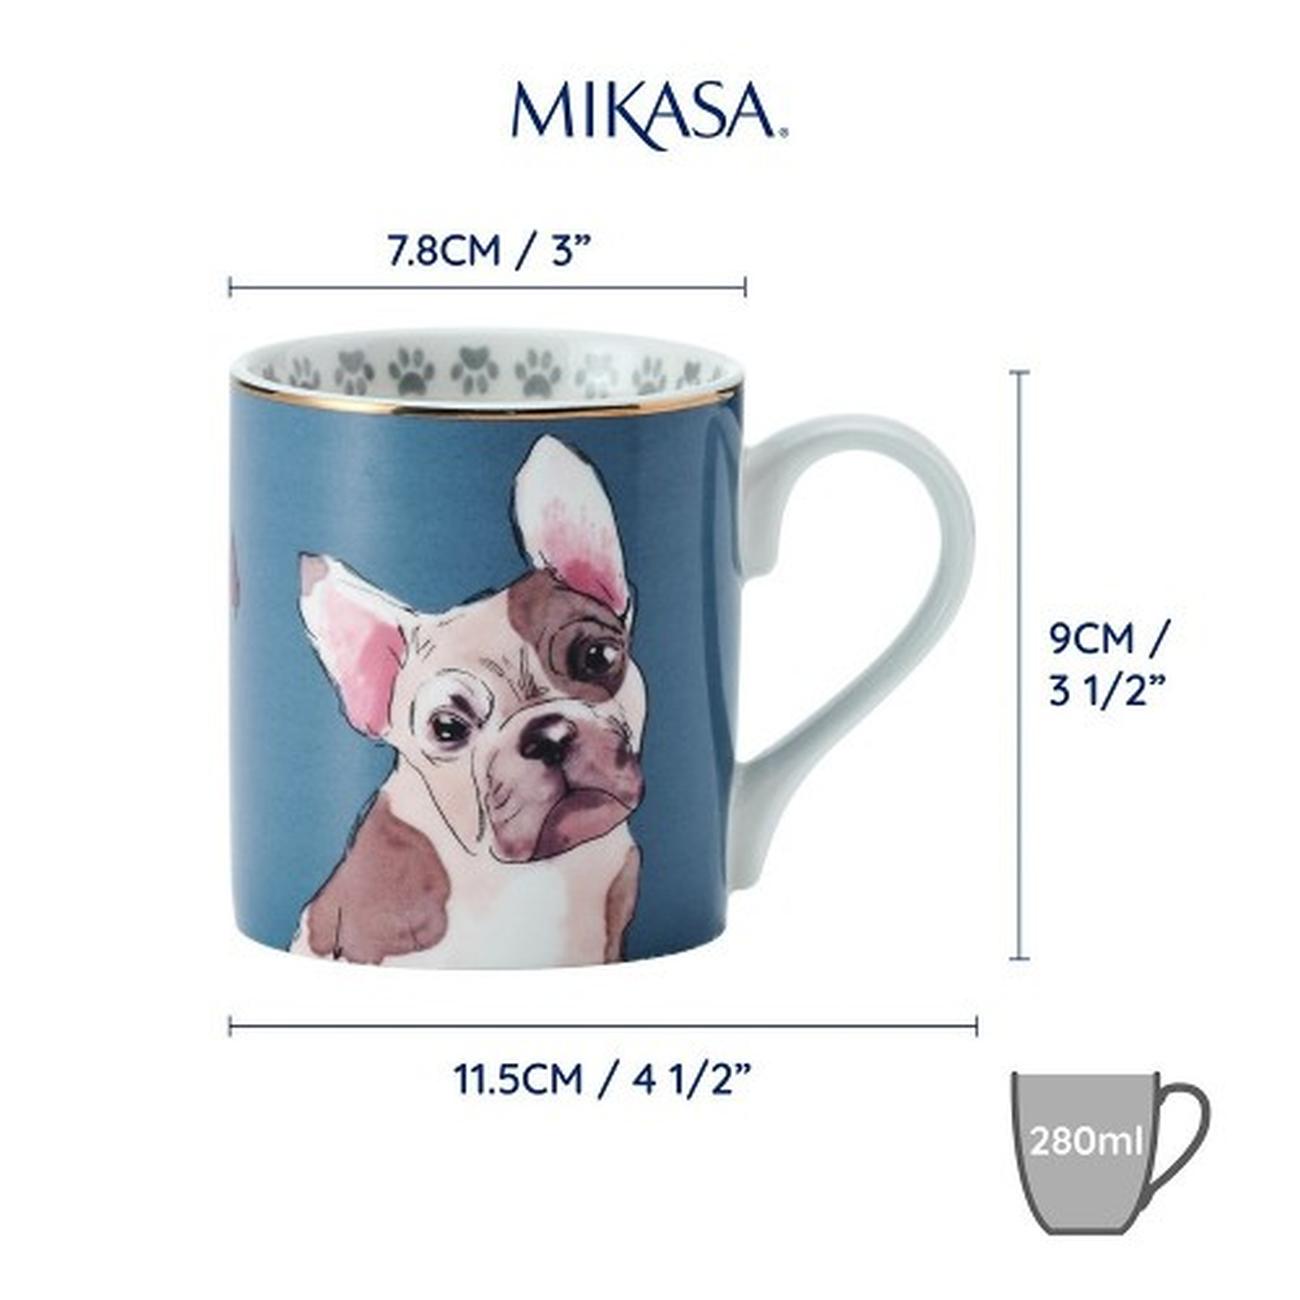 kc-dog-straight-sided-porcelain-mug-280ml - Mikasa French Bulldog Straight-Sided Porcelain Mug 280ml